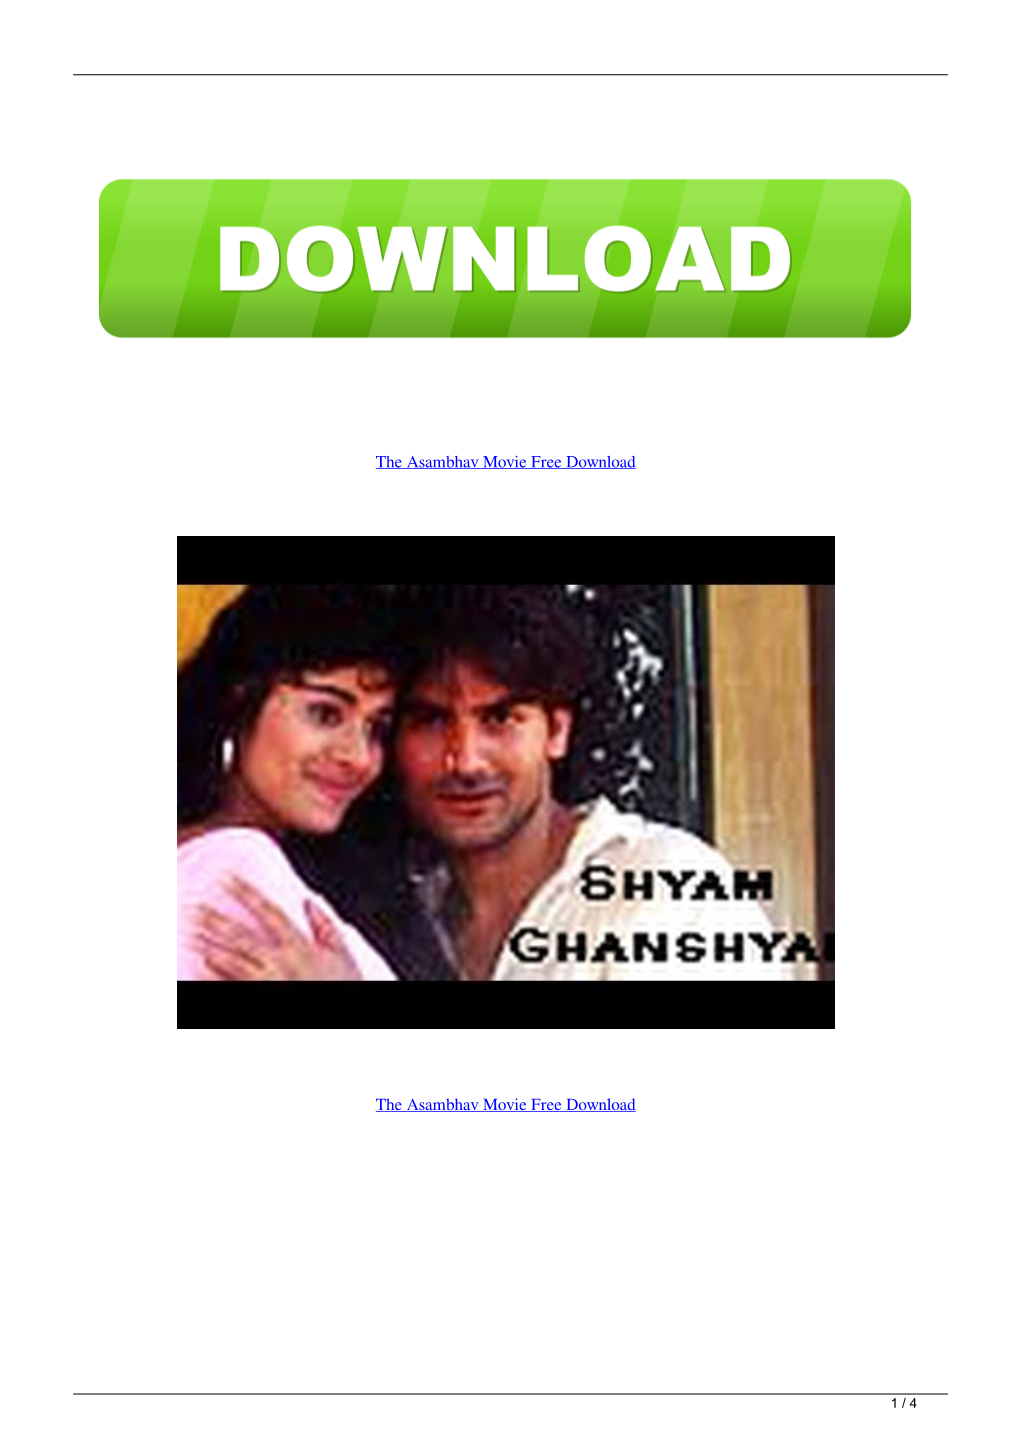 The Asambhav Movie Free Download